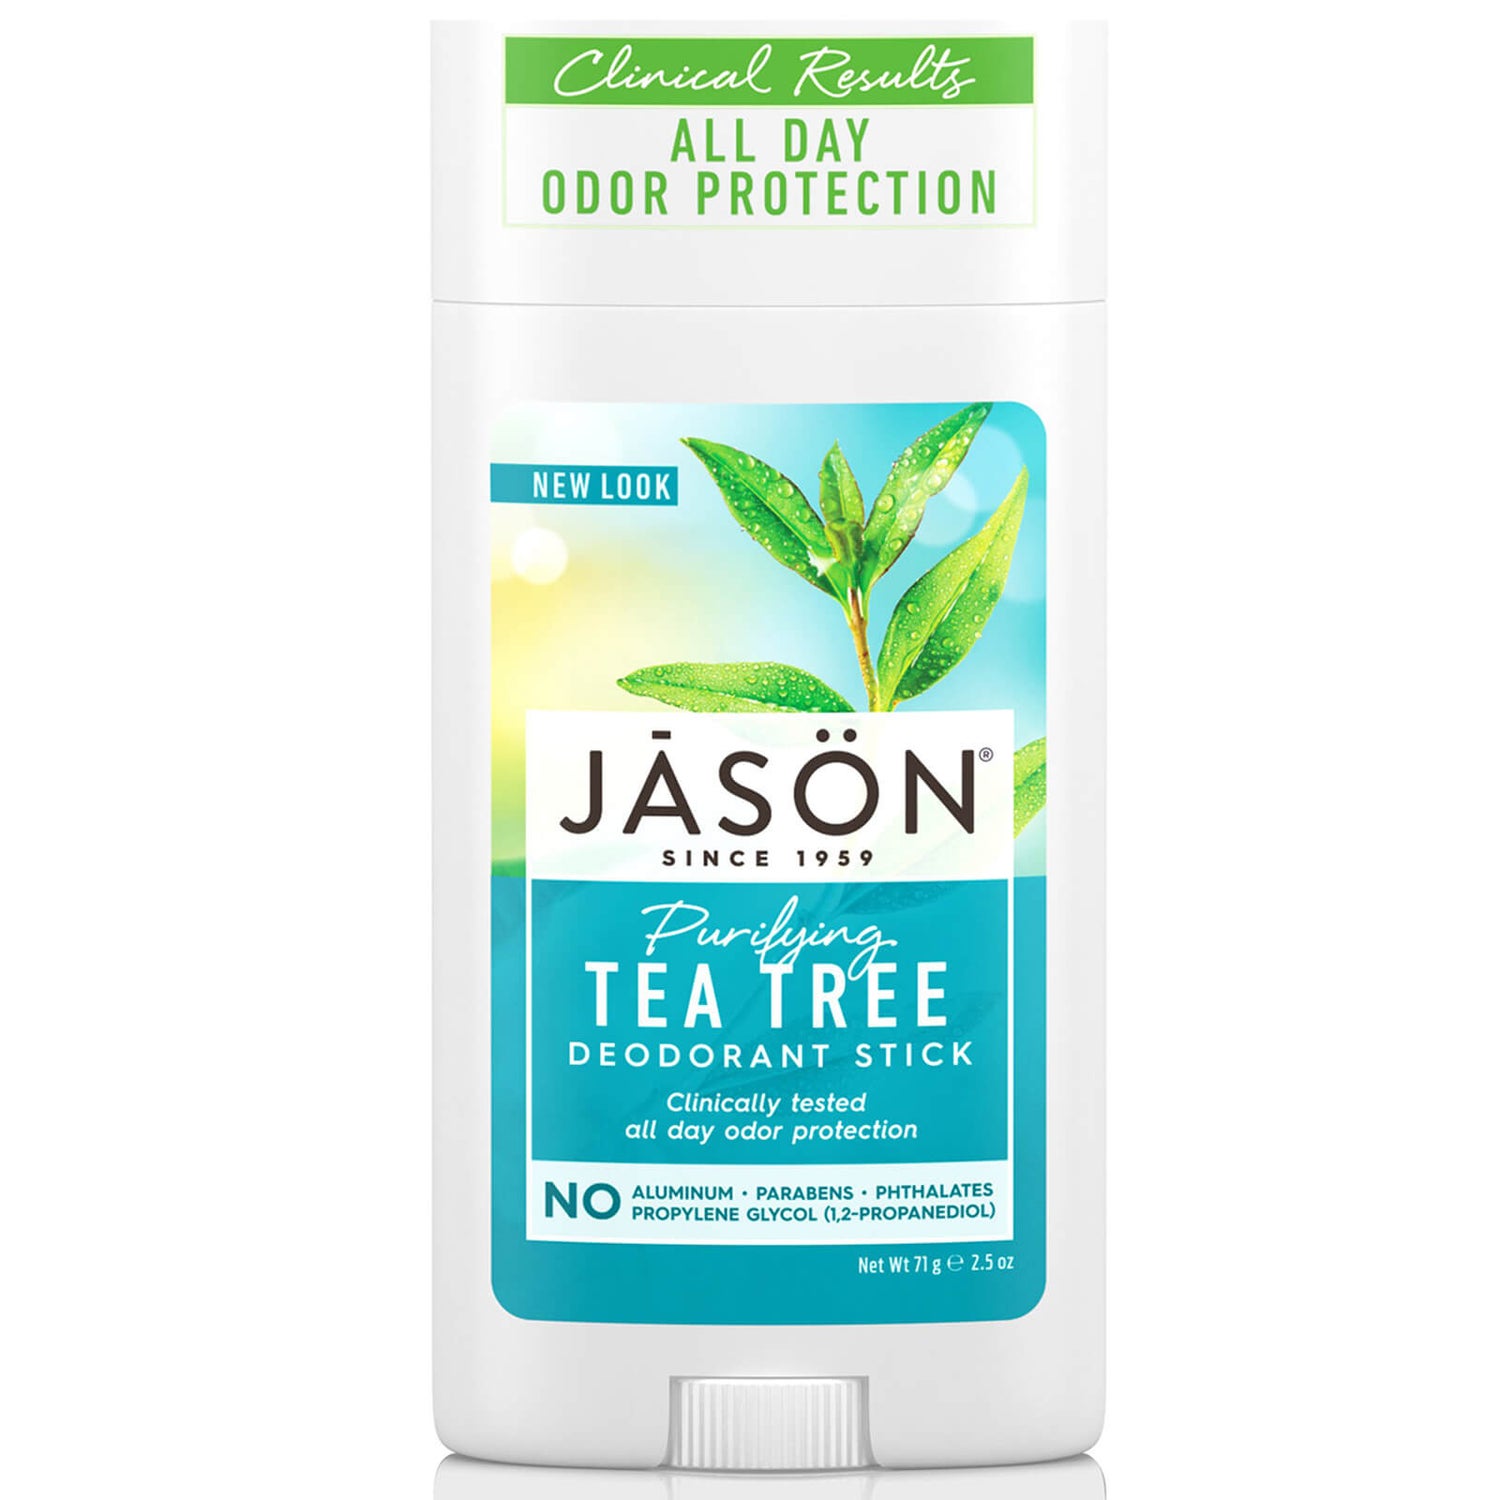 Jason Tea Tree Deodorant Stick (2.6oz)